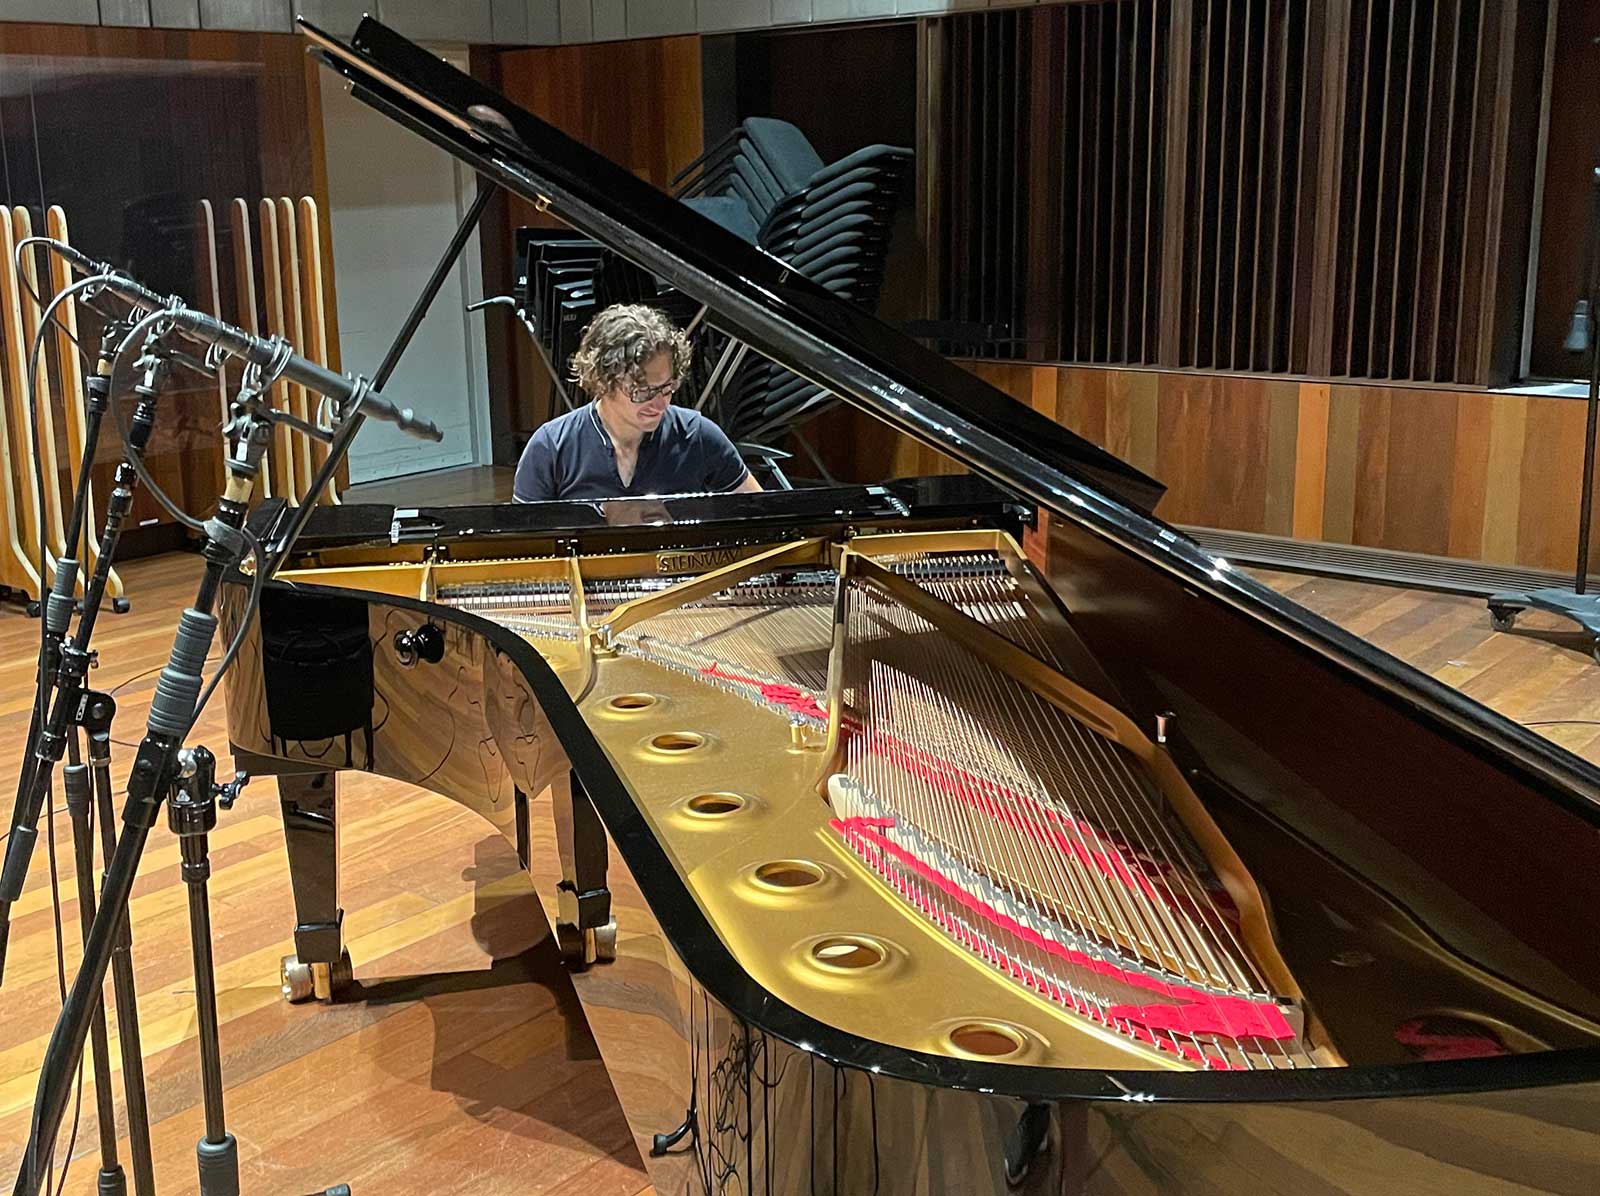 Scott Burgess recording harpsichord with Sanken CUX-100K mics